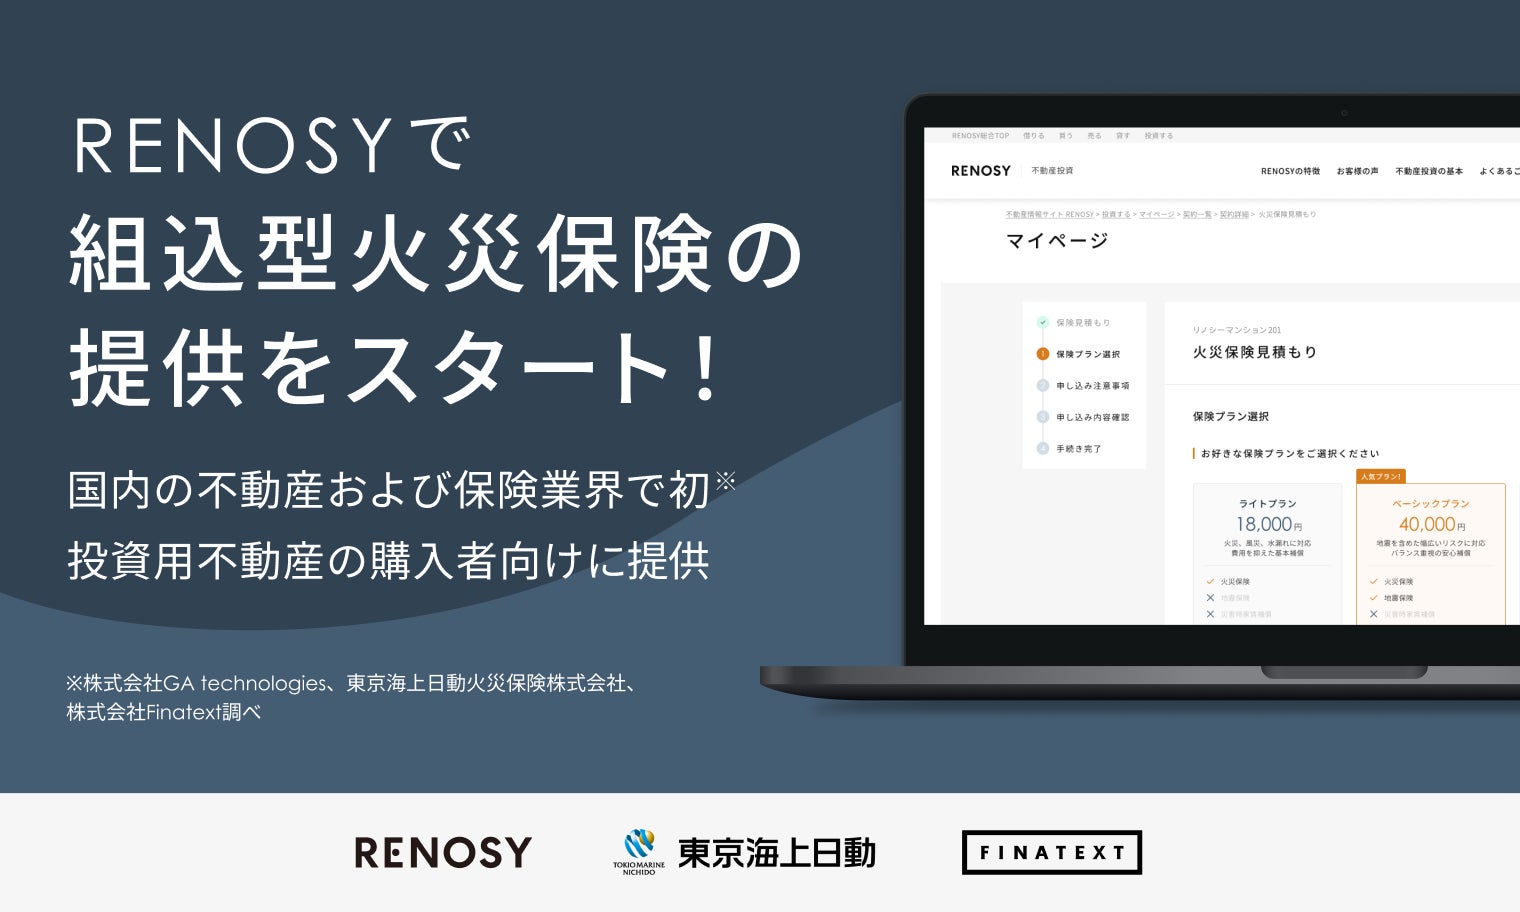 GA technologies・東京海上日動・Finatext、投資用不動産マーケットプレイス「RENOSY」内で組込型火災保険の提供を開始のサブ画像1